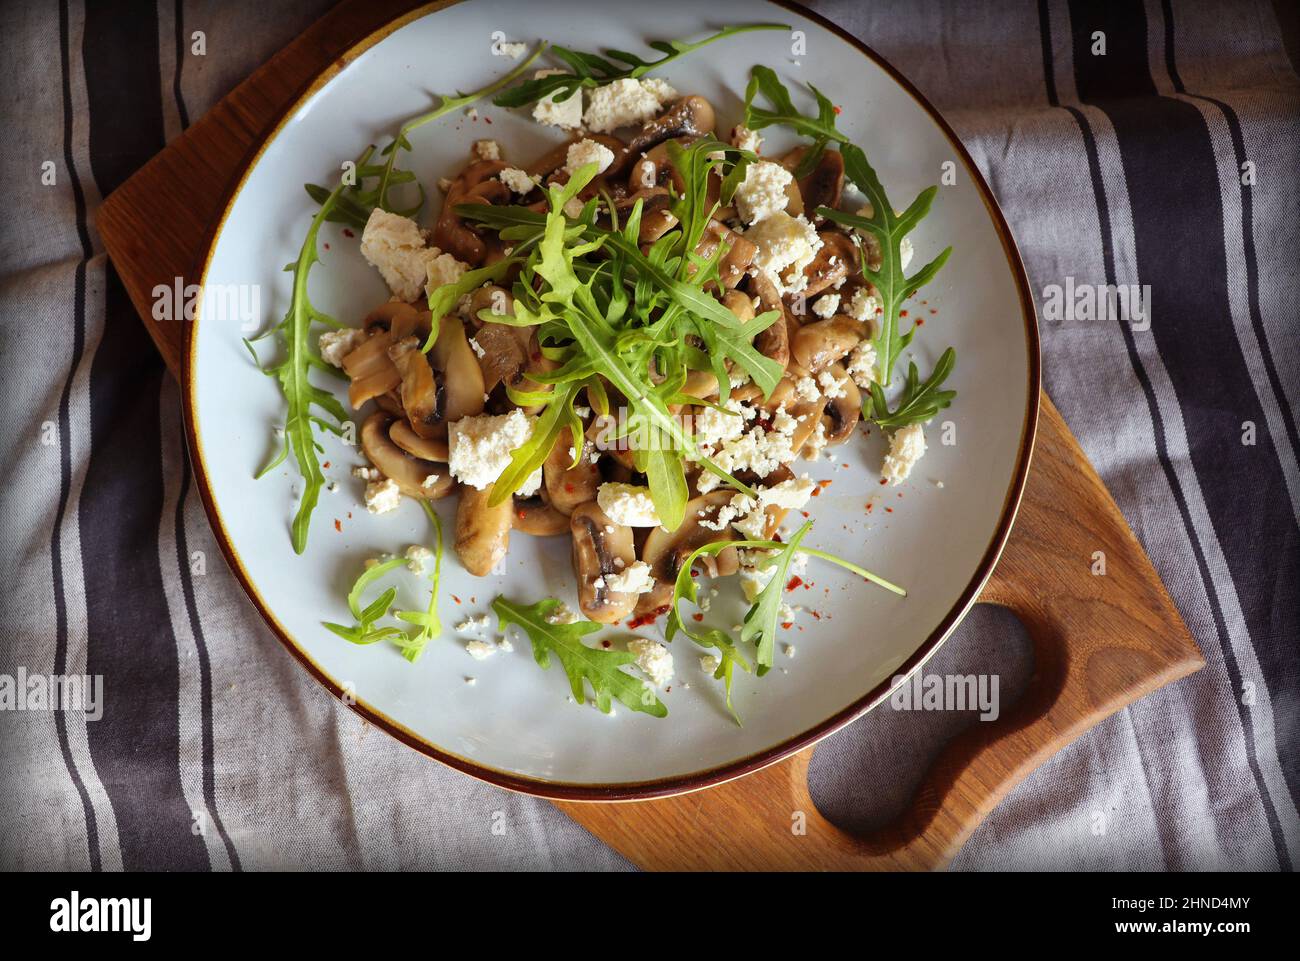 Warm mushroom salad with feta cheese and arugula on a linen napkin Stock Photo